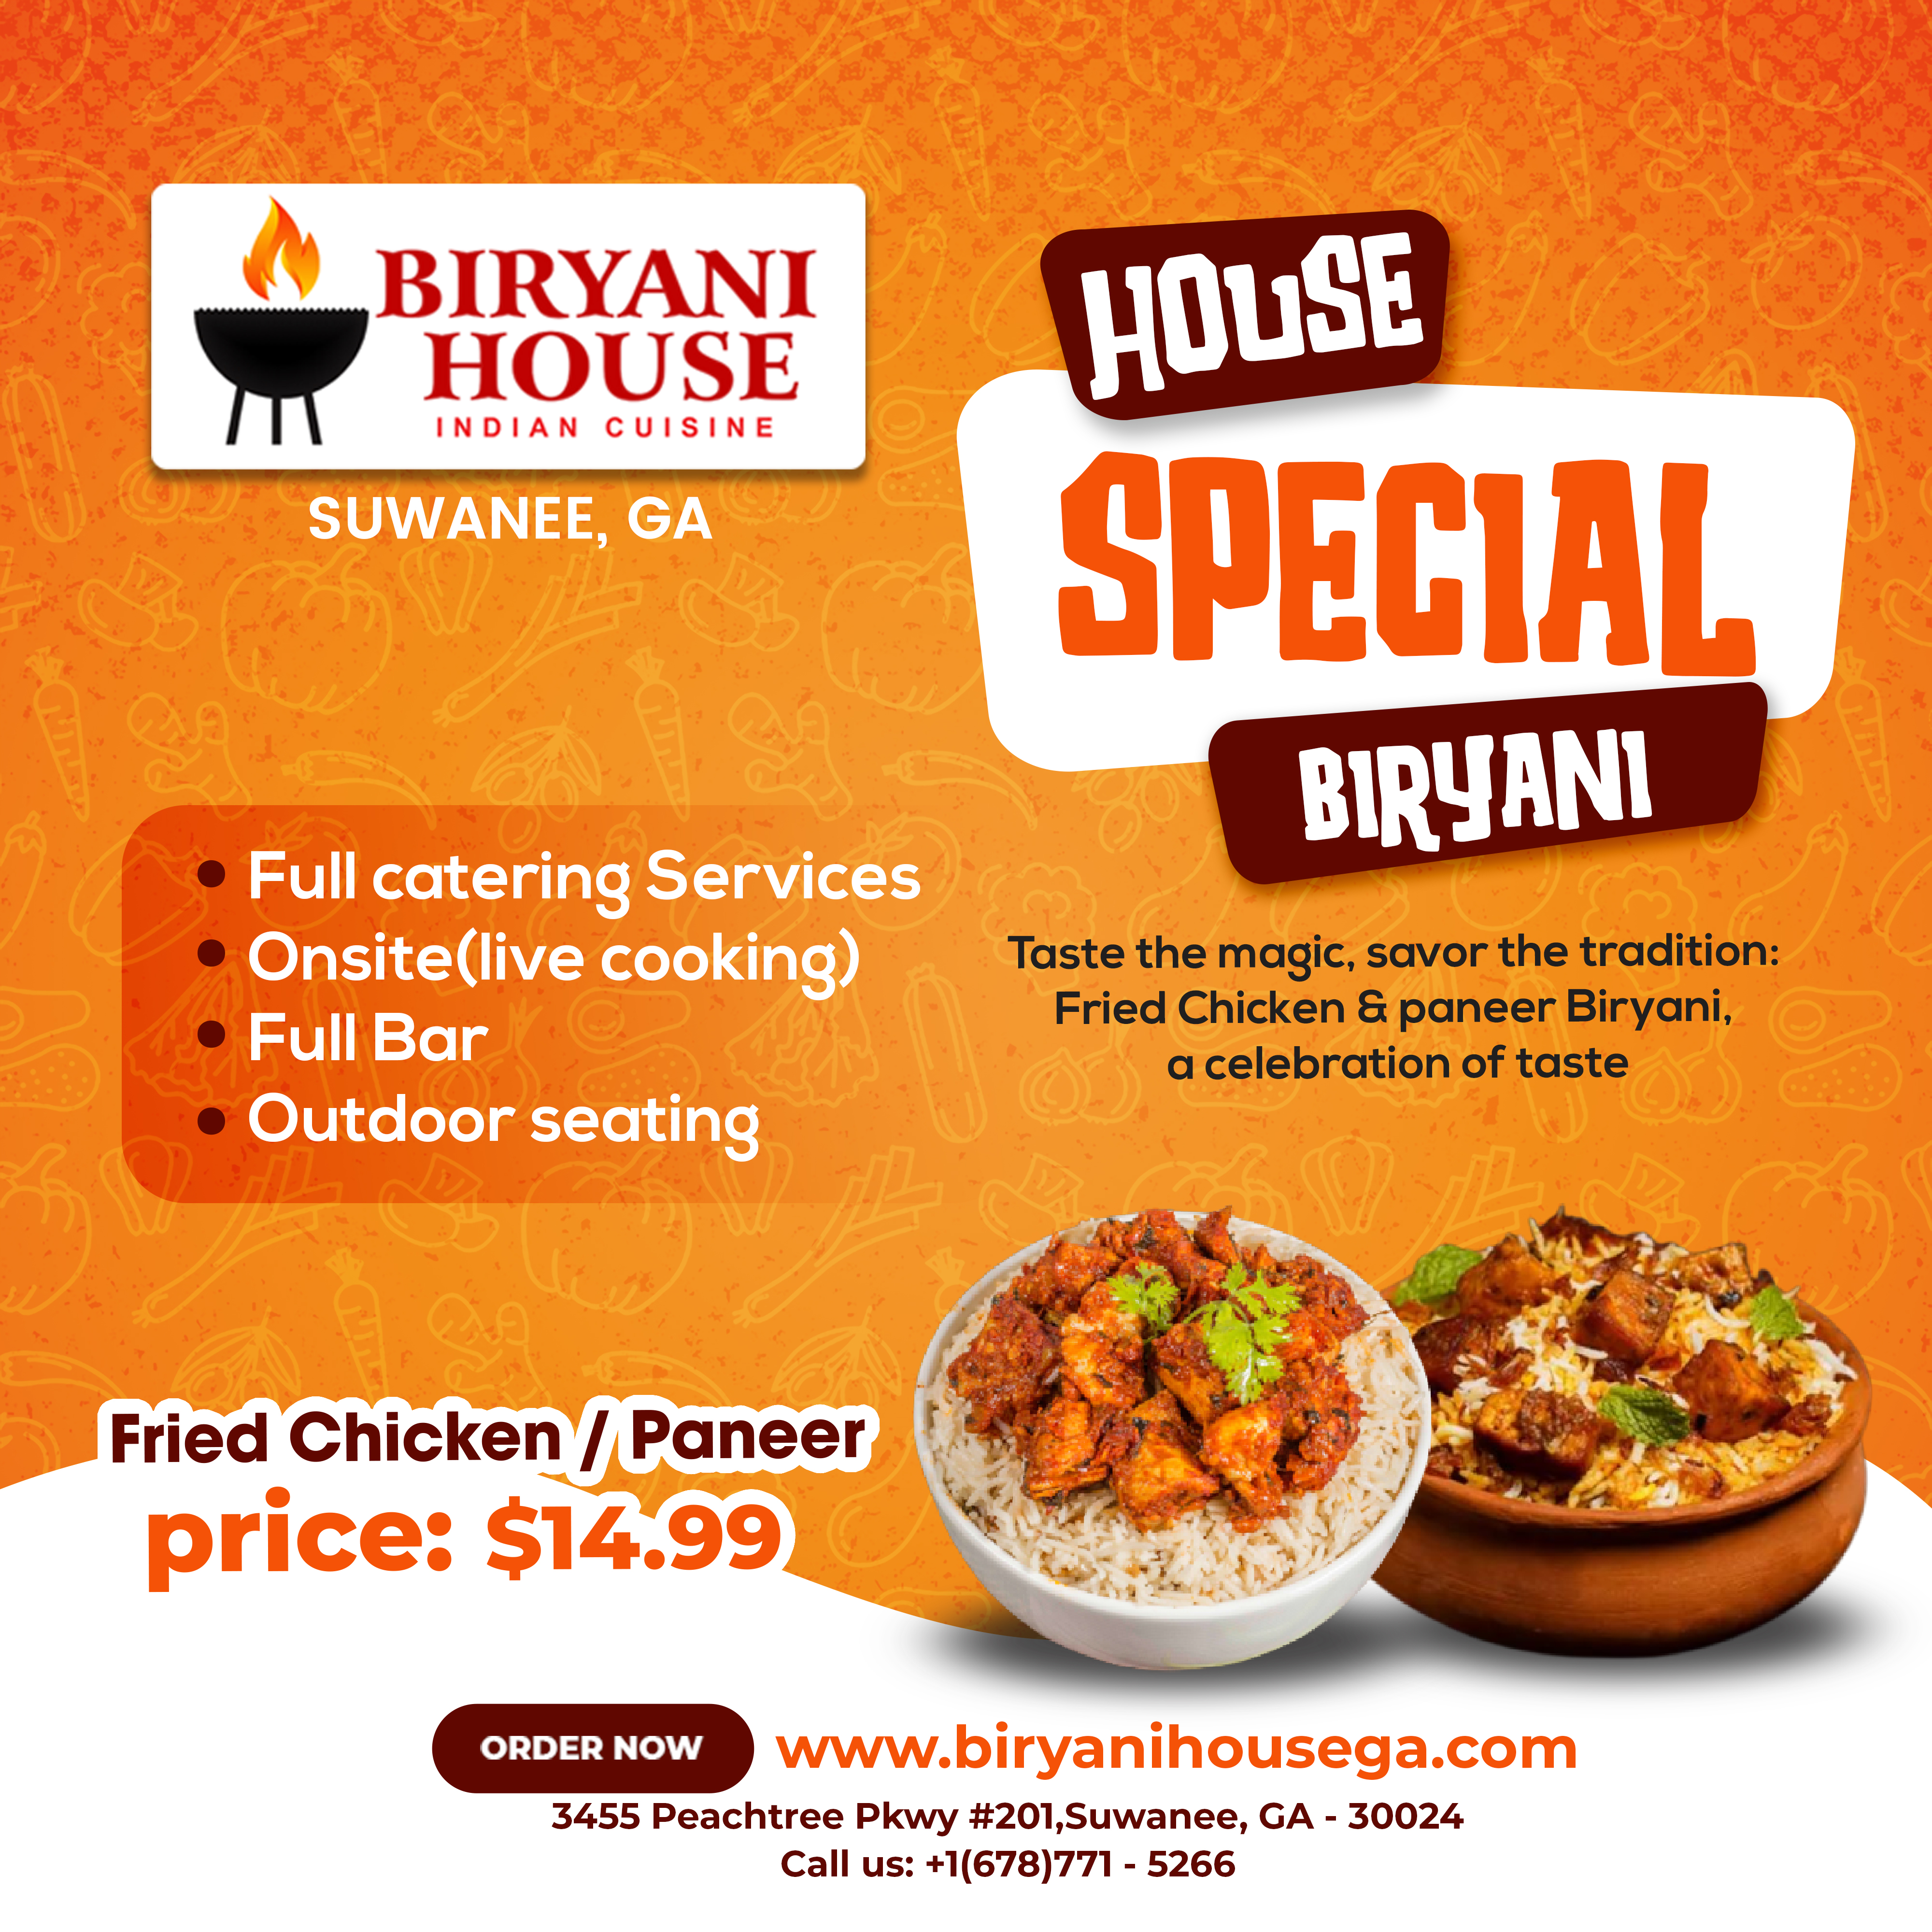 House Special Biryanis